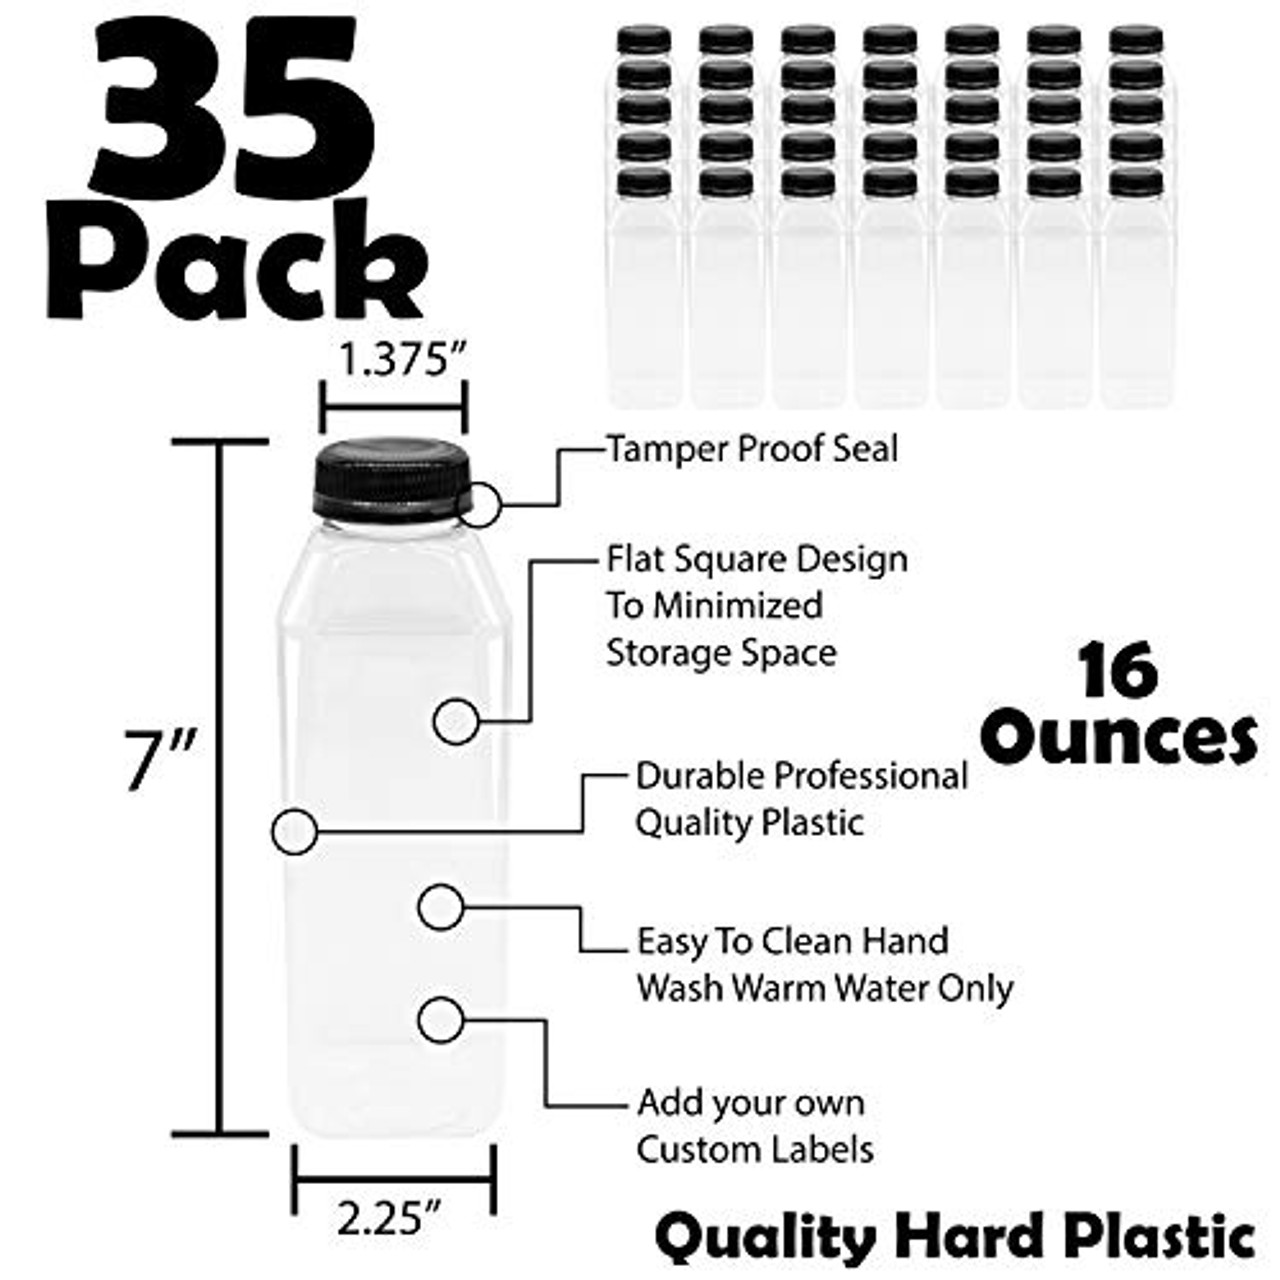 8 oz Clear PET Cylinder Bottles (Bulk) Caps Not Included